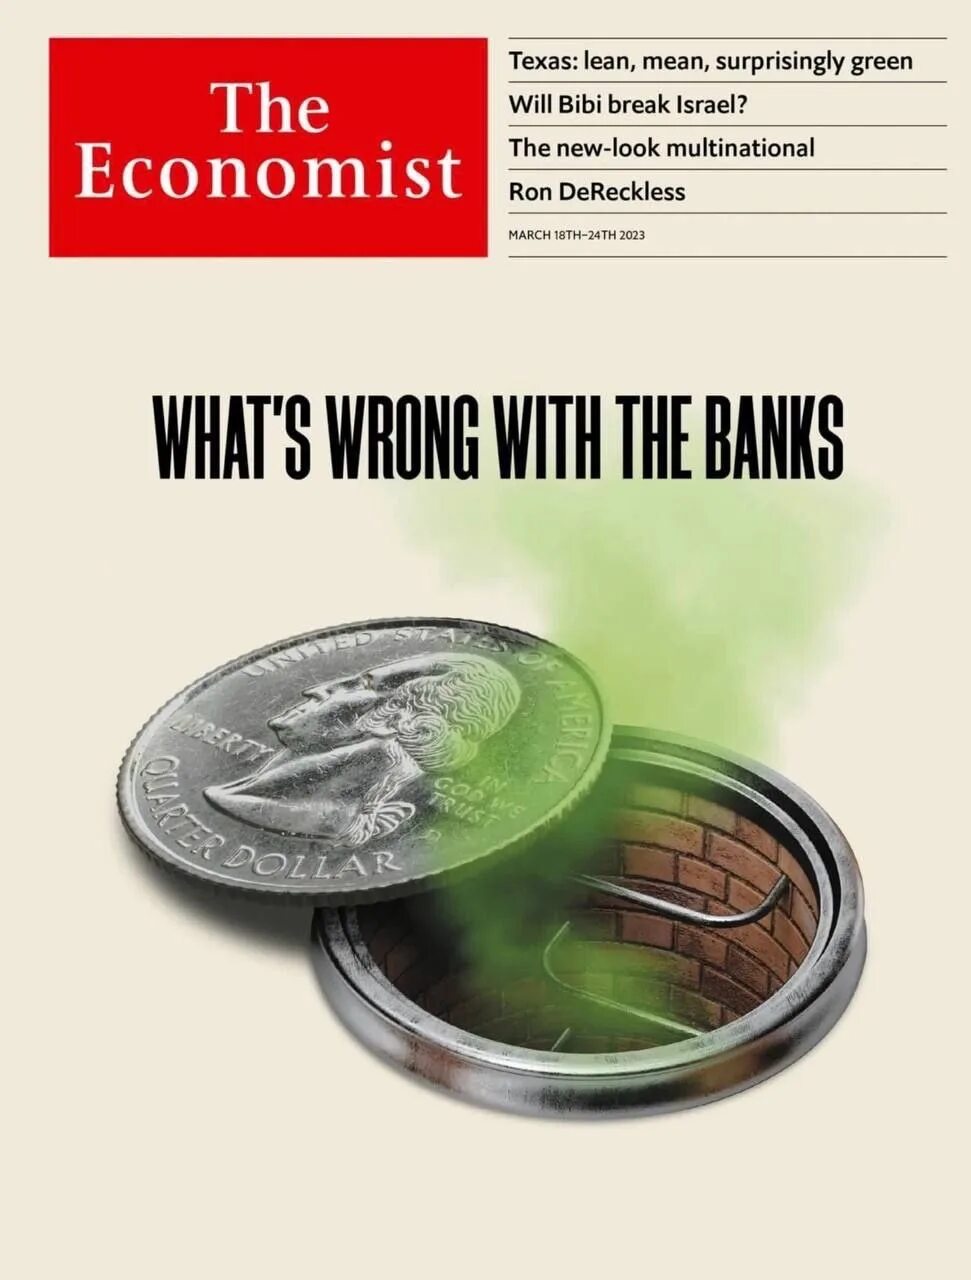 Журнал экономист прогноз на 2024. The Economist 2023 обложка. The Economist обложка. Новая обложка the Economist. Обложка журнала экономист 2023.